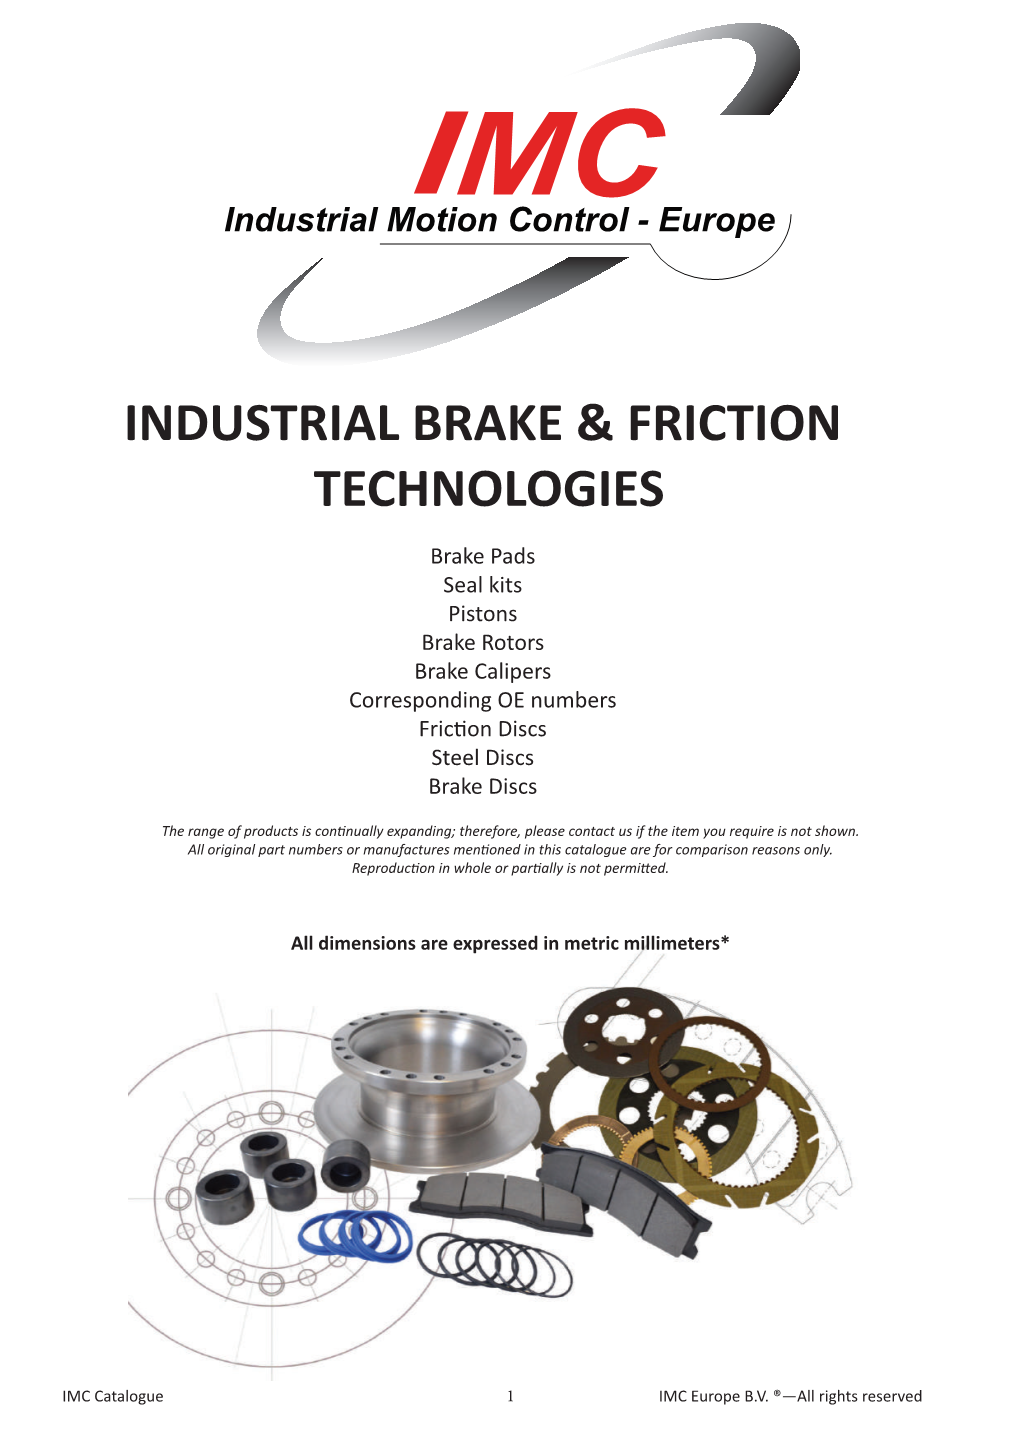 Industrial Brake & Friction Technologies